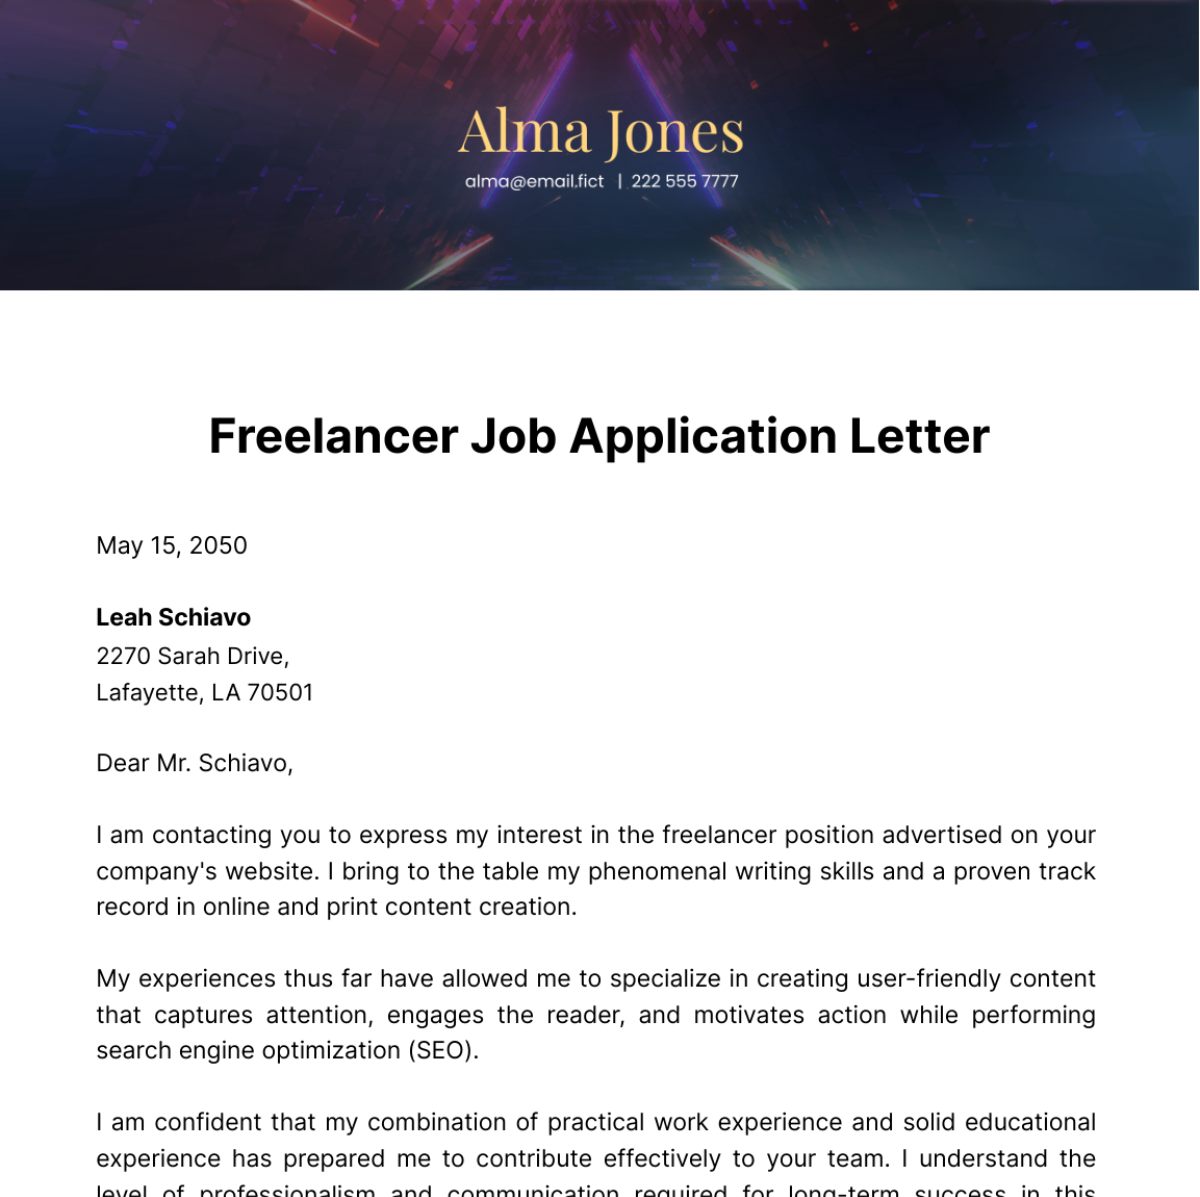 Freelancer Job Application Letter Template